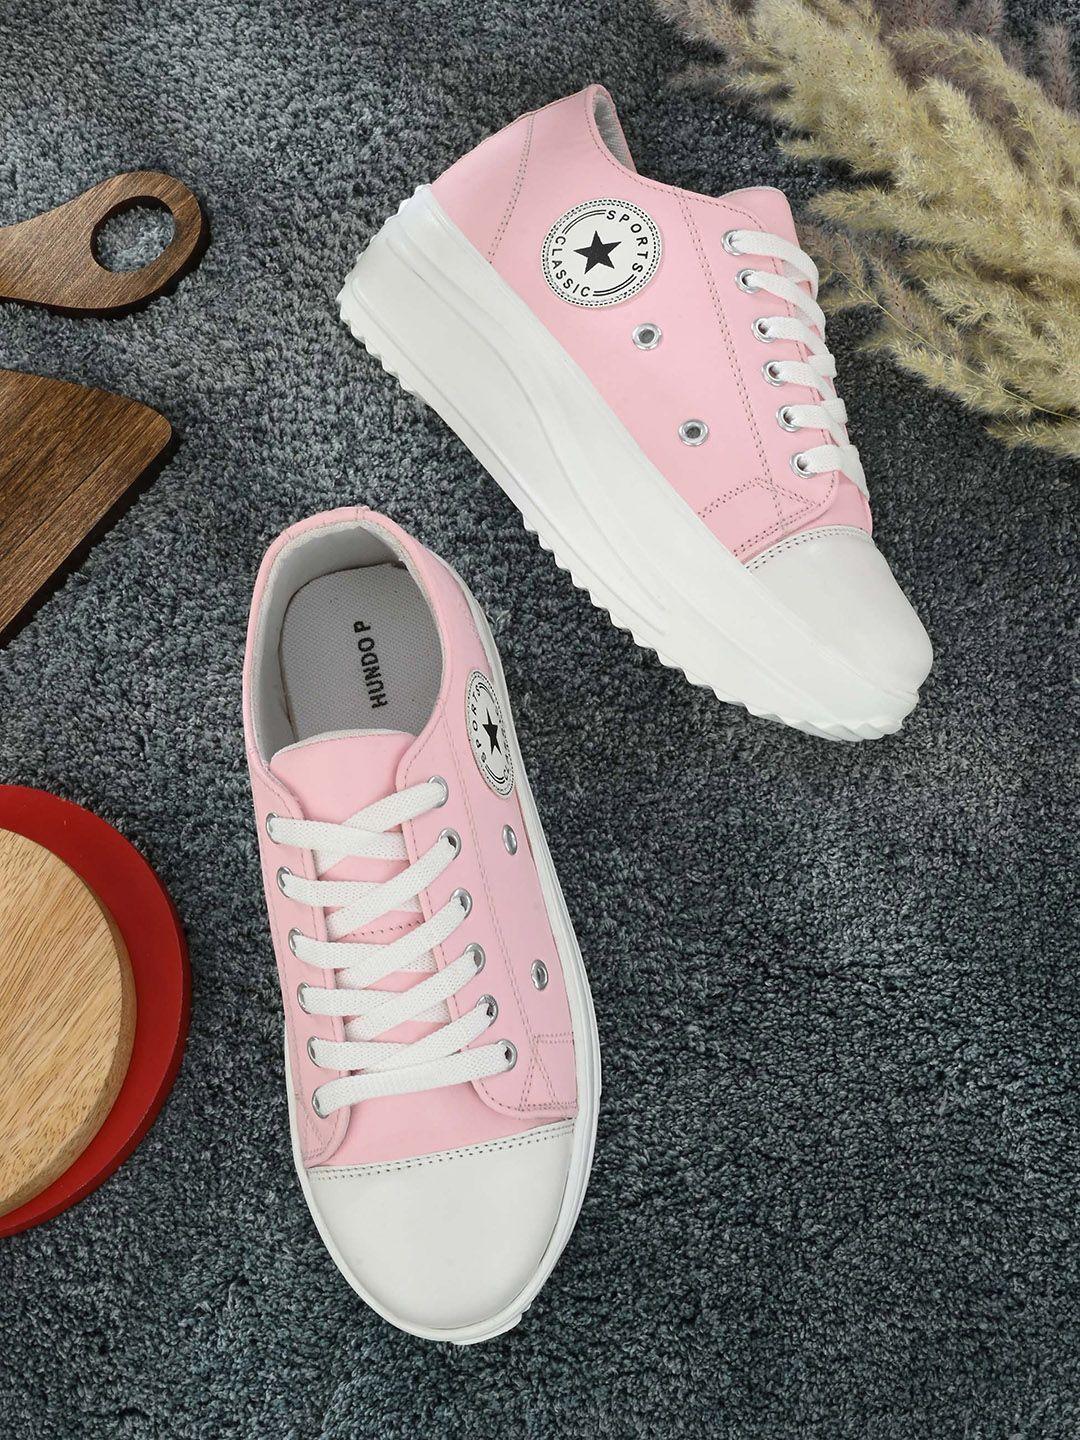 hundo p women pink colourblocked sneakers